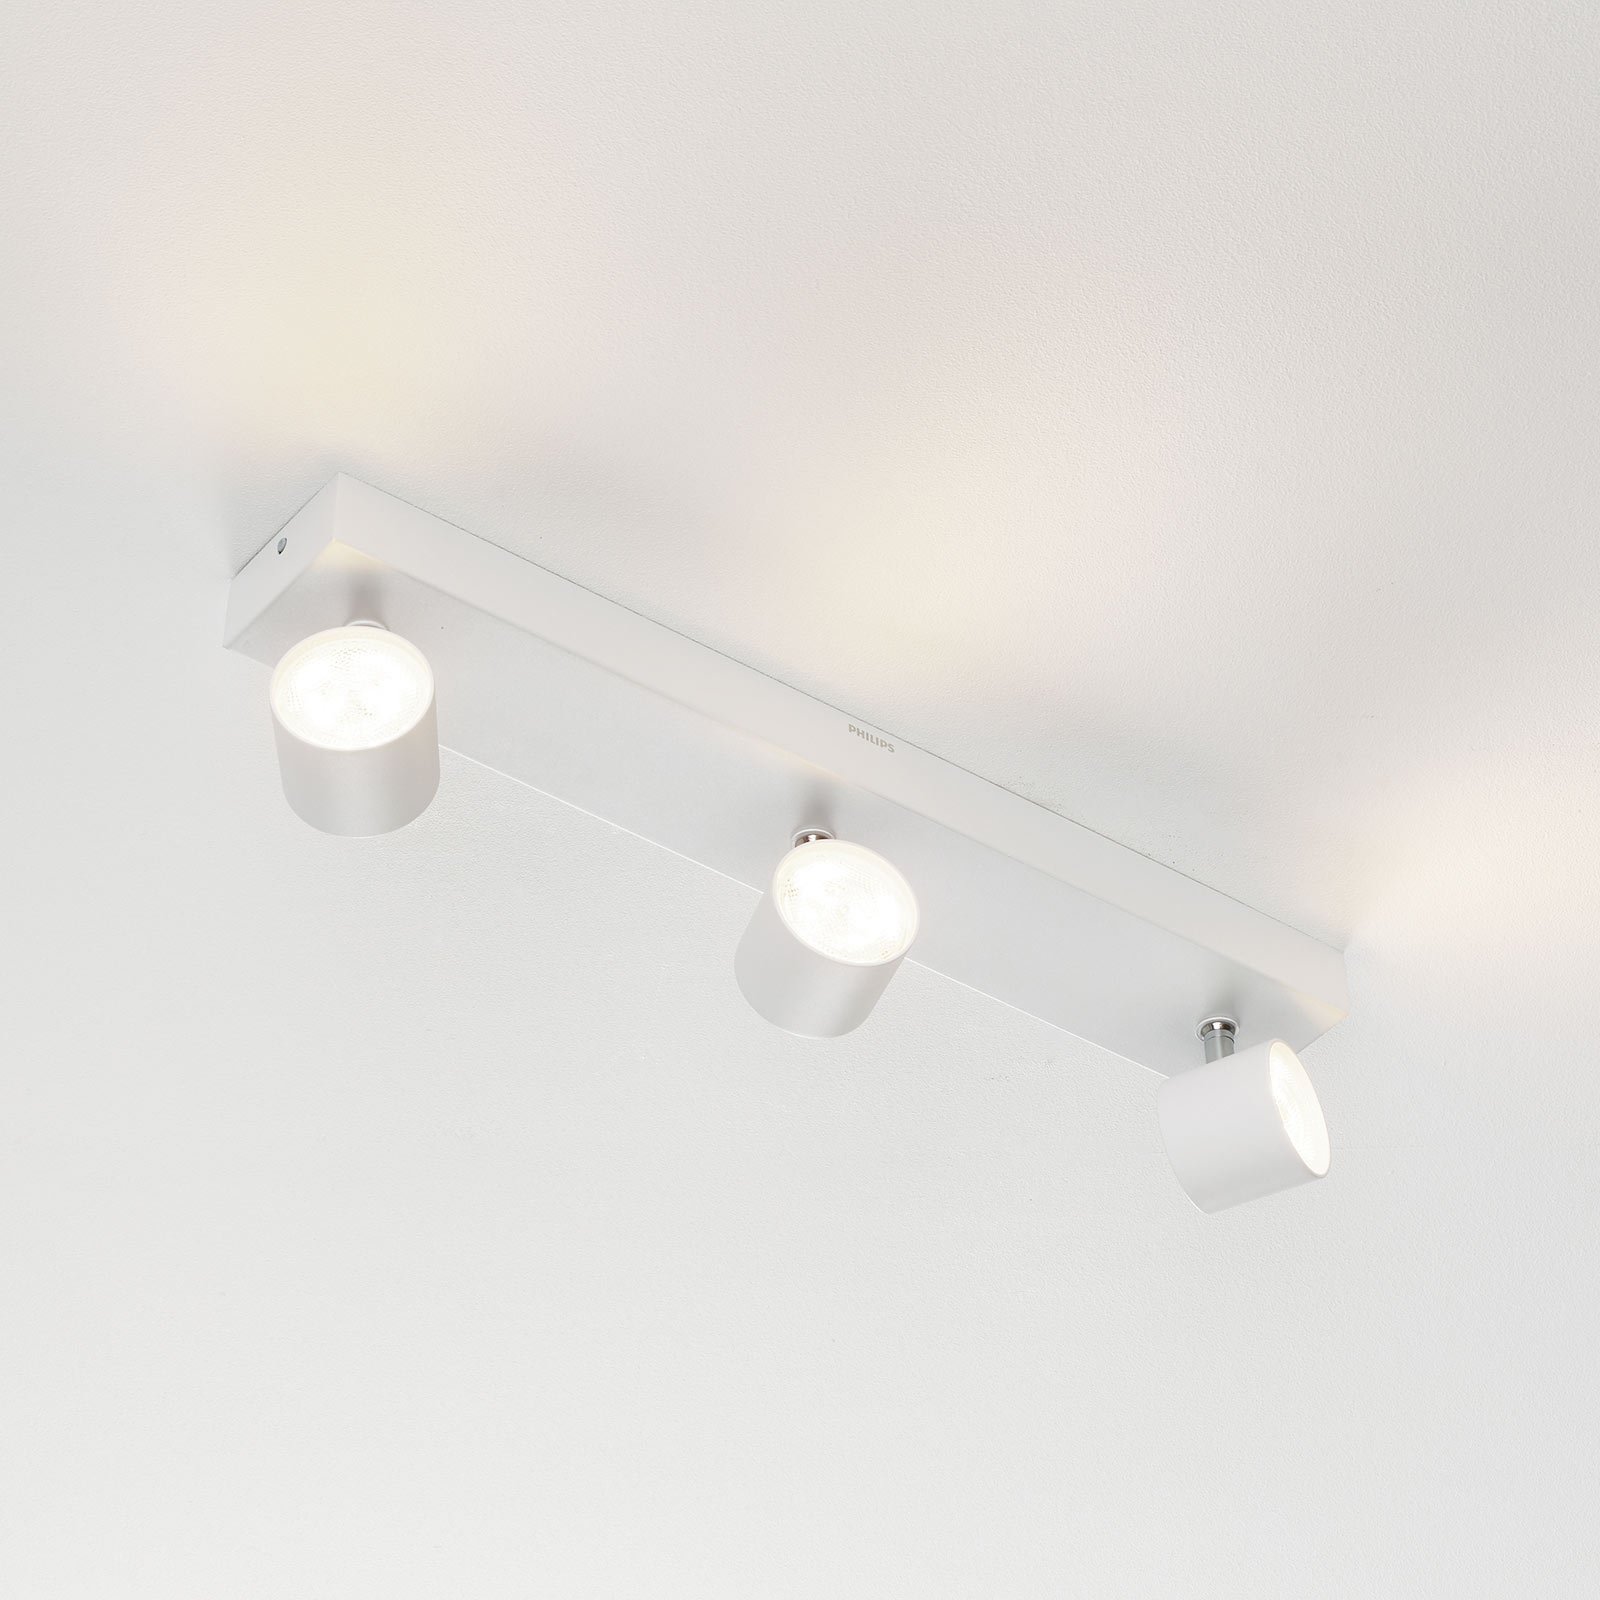 Drievoudige LED spot Ster, warmglow, wit